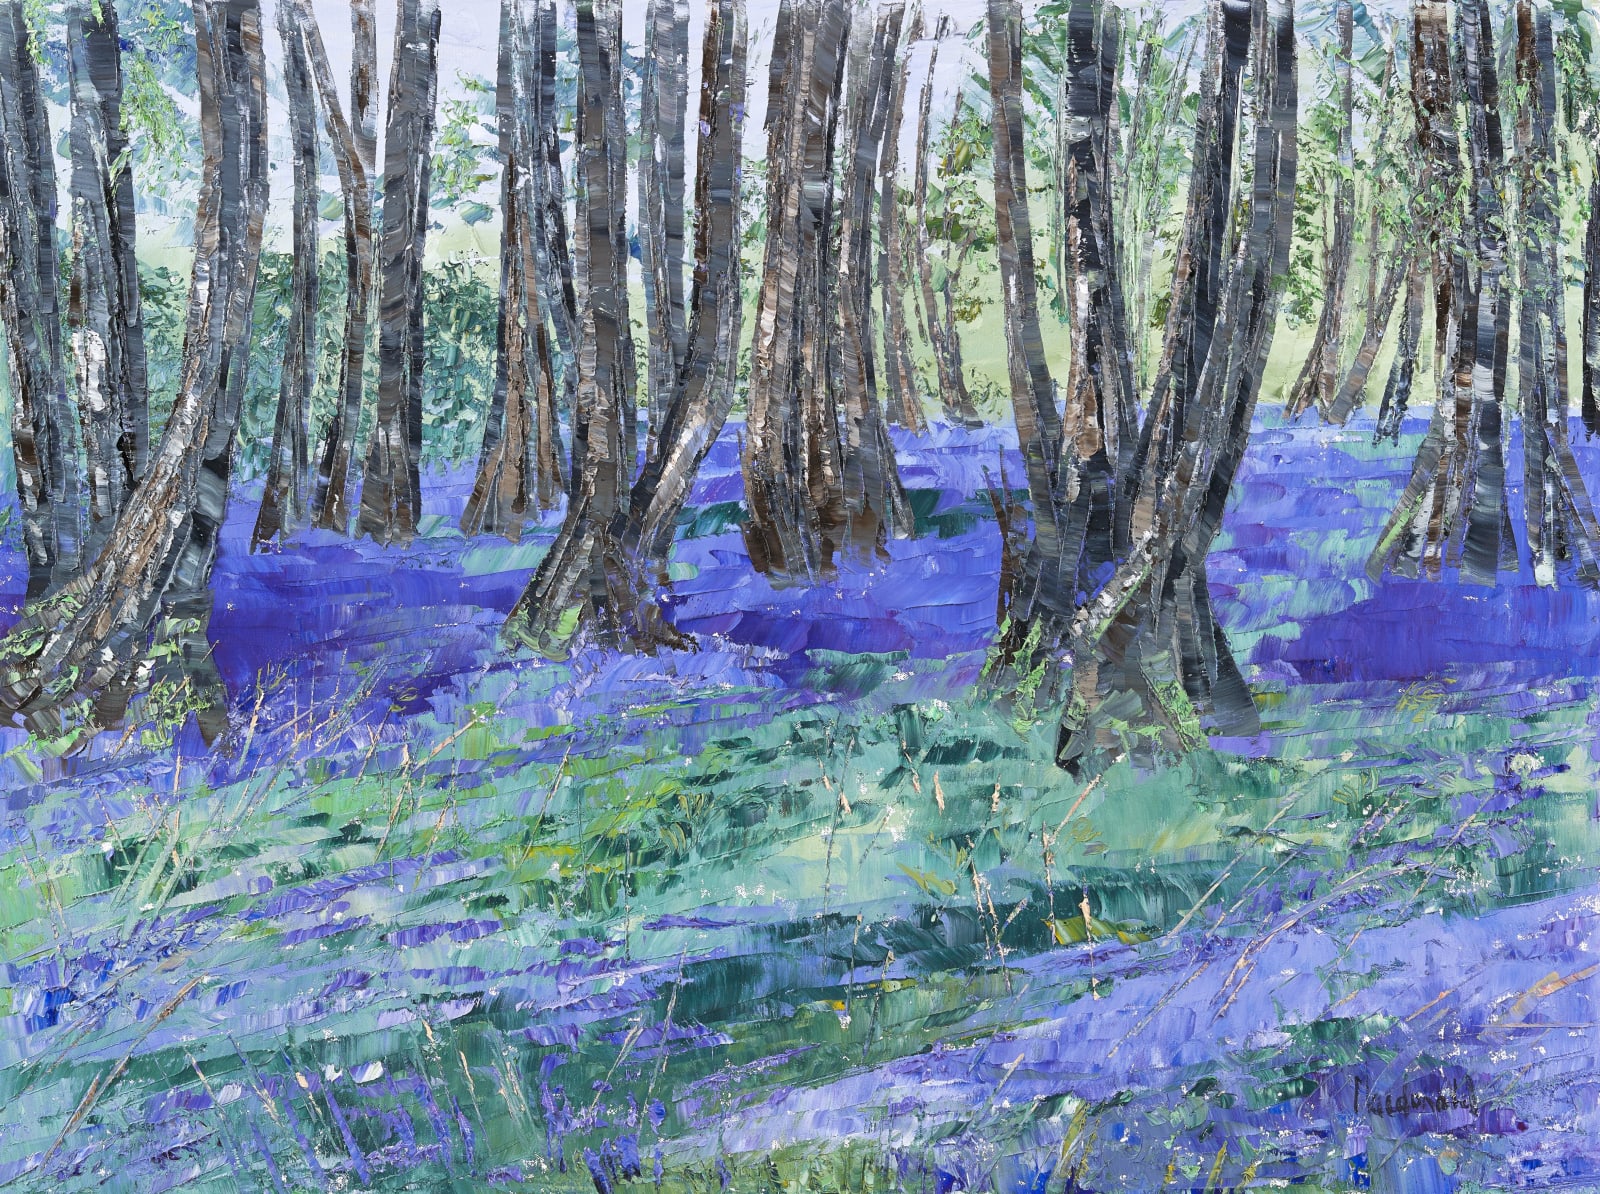 Frances Macdonald, Intensely Blue, Duntrune Wood